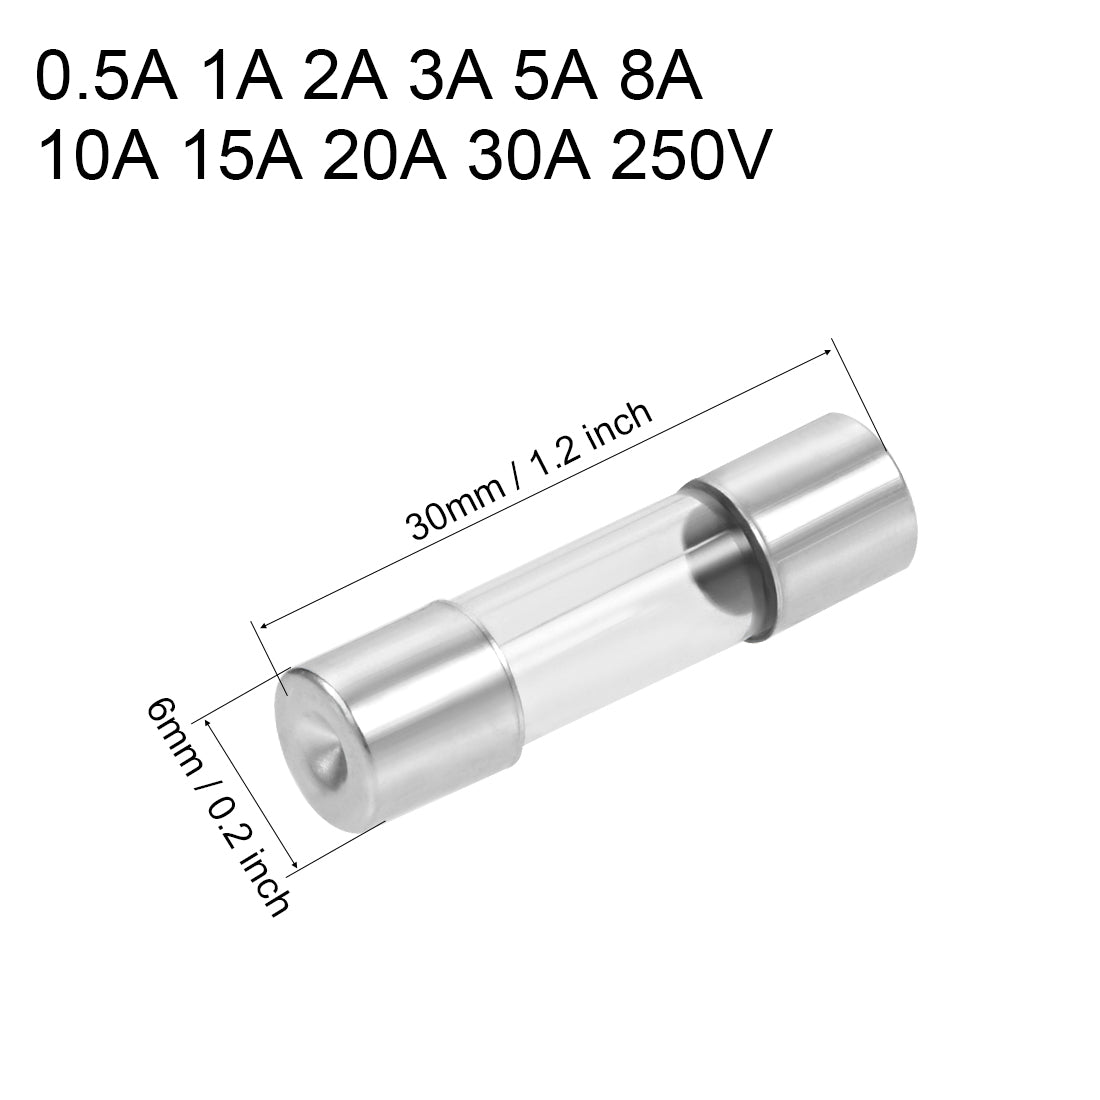 uxcell Uxcell Automotive Cartridge Fuse 0.5A 1A 2A 3A 5A 8A 10A 15A 20A 30A 250V 5x20mm Fast Blow Replacement for Car Audio Amplifier Glass 100pcs